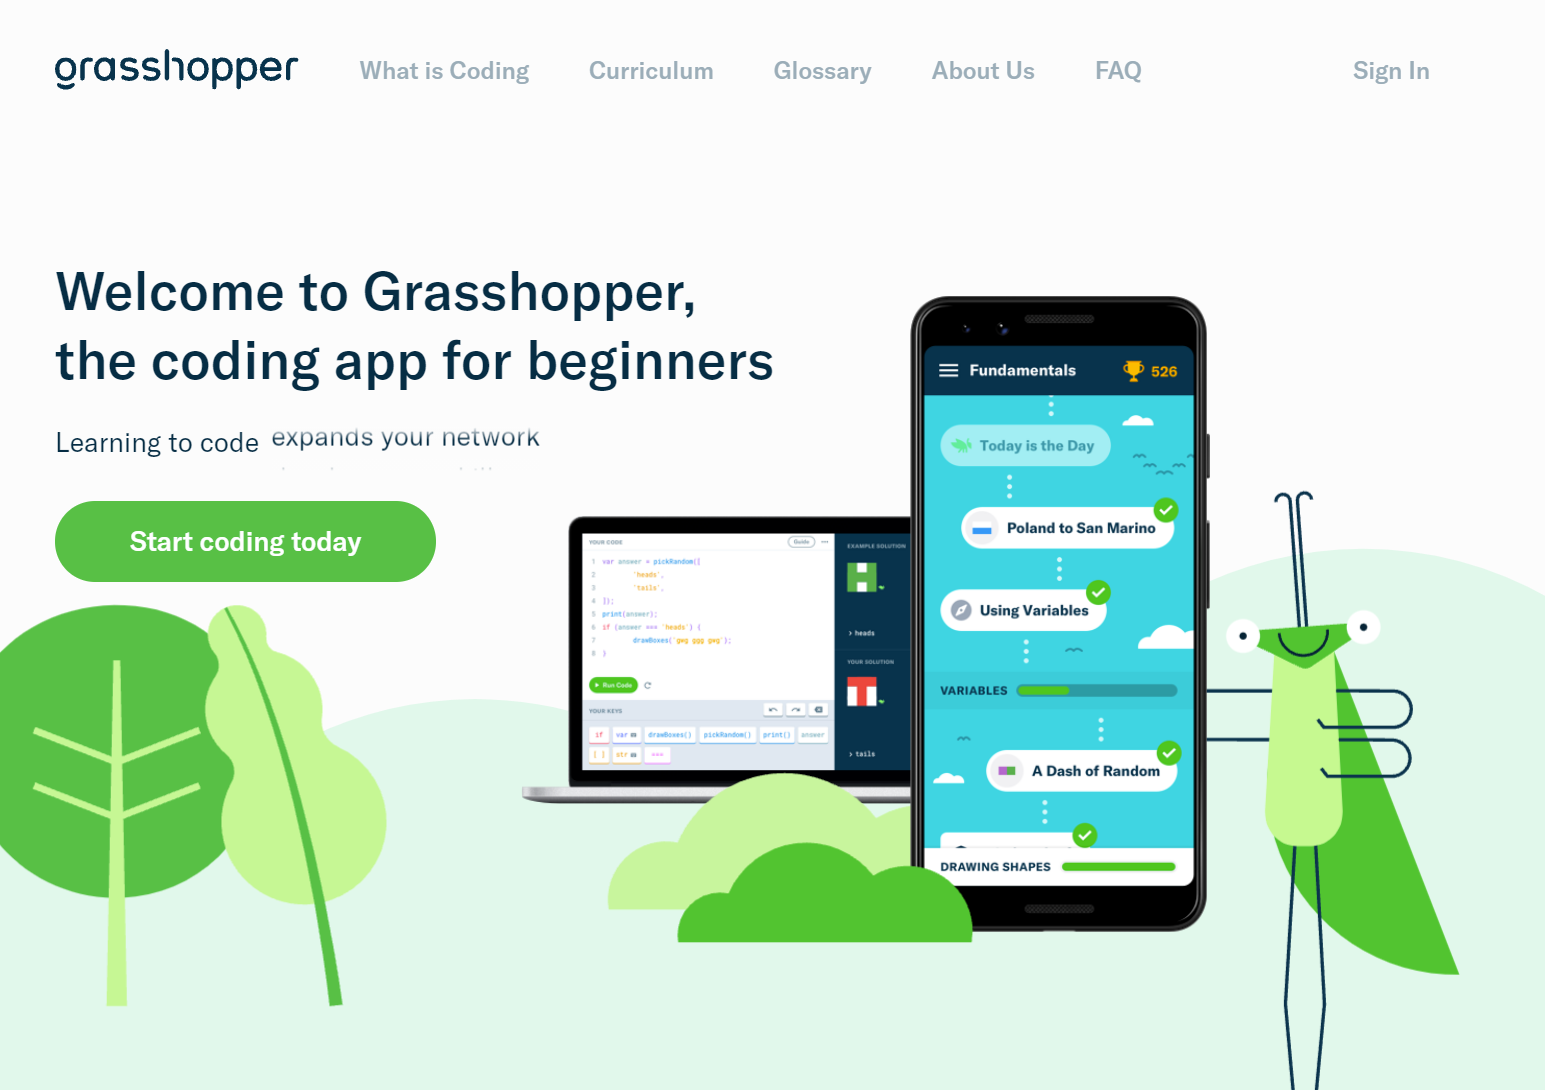 The Grasshopper app homepage.